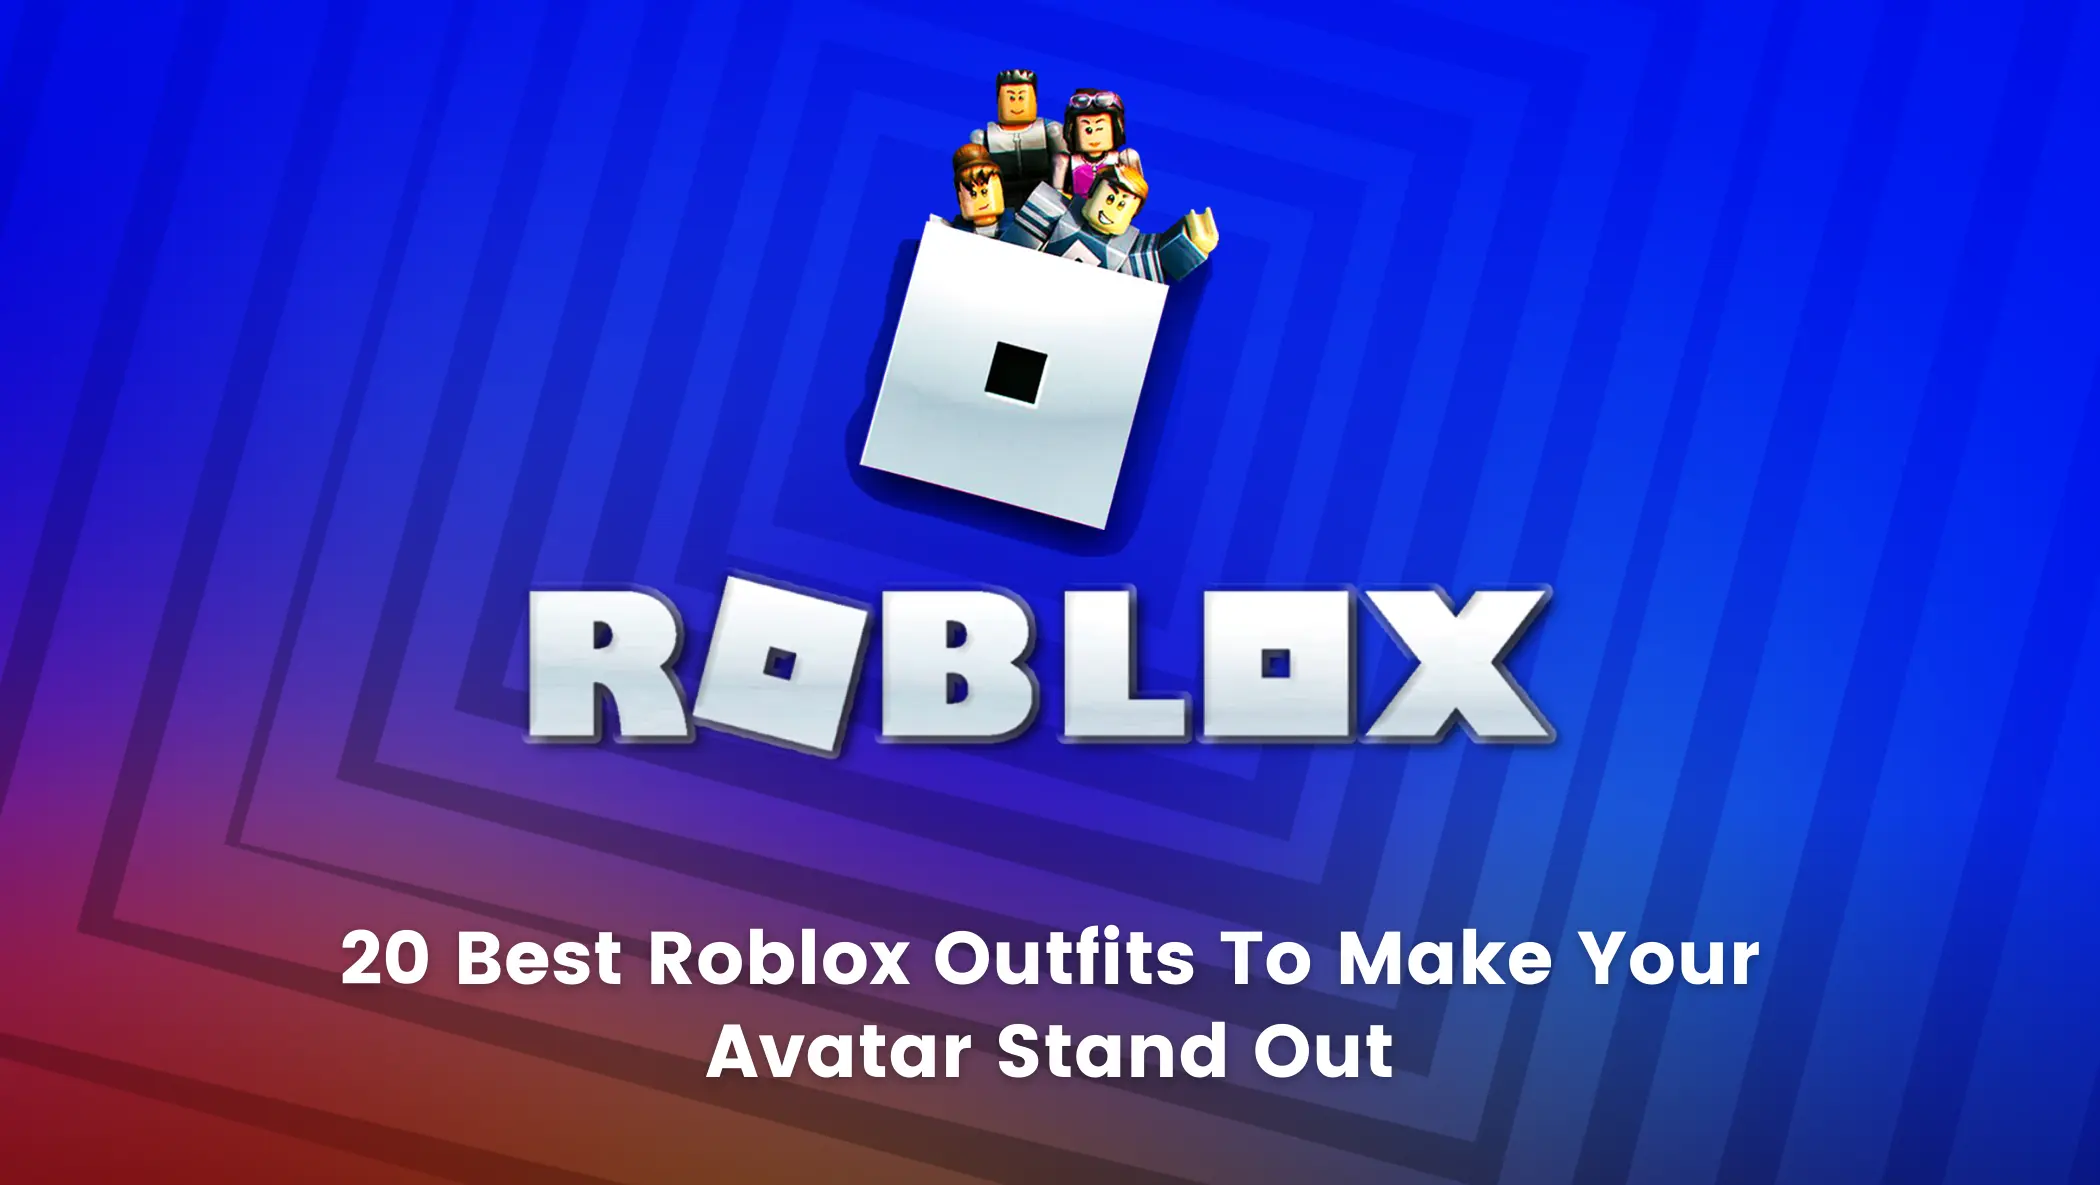 Preppy Roblox Avatars Outfit Ideas  OyaPredict